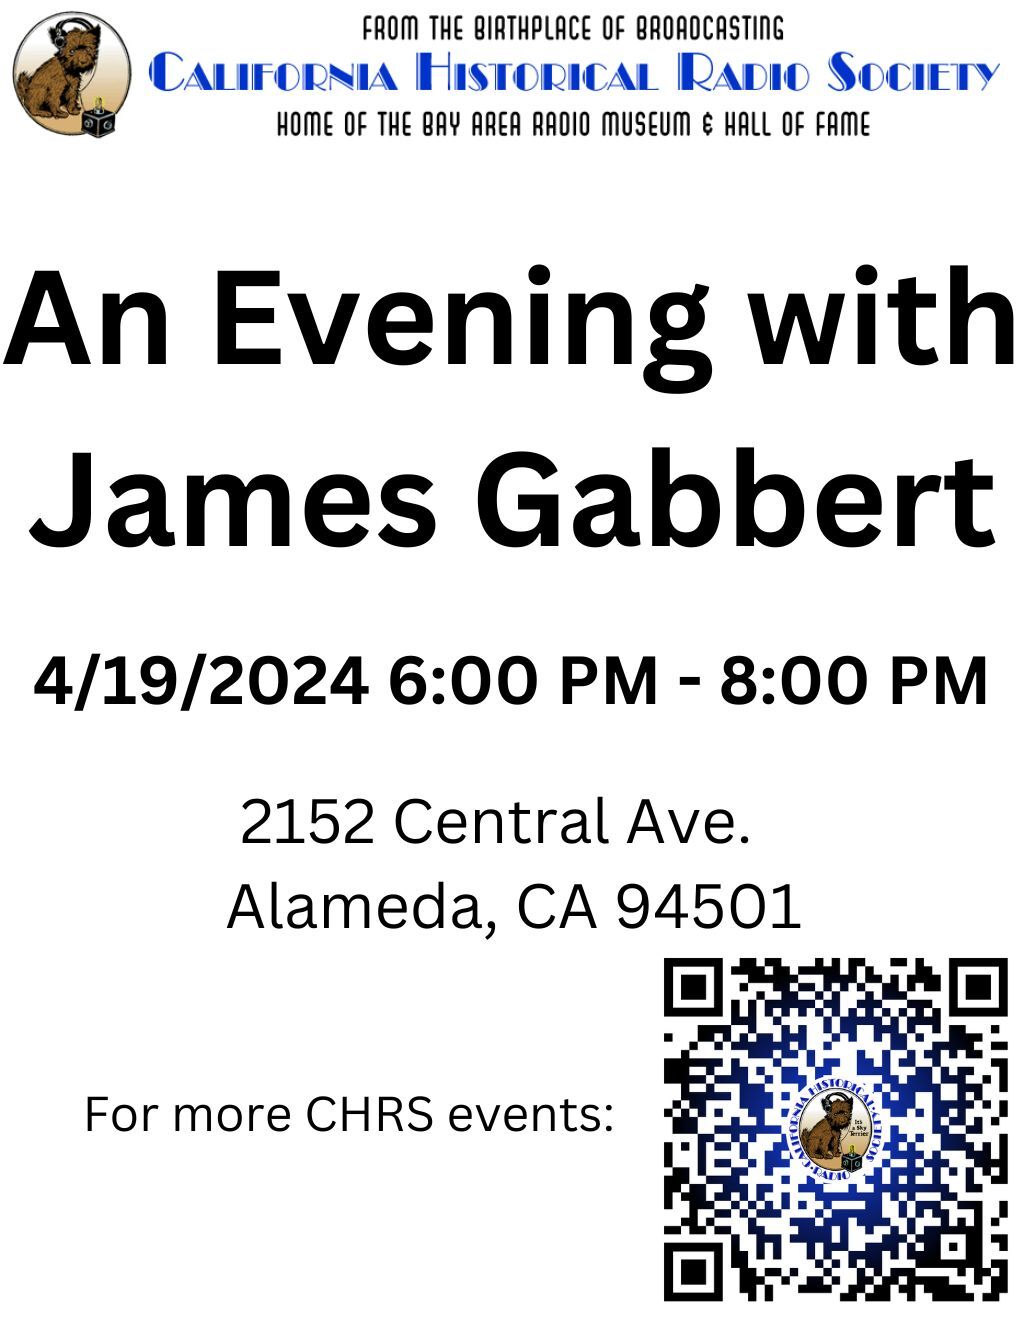 California Historical Radio Society An Evening with James Gabbert at the California Historical Radio Society promotion flier on Digifli com